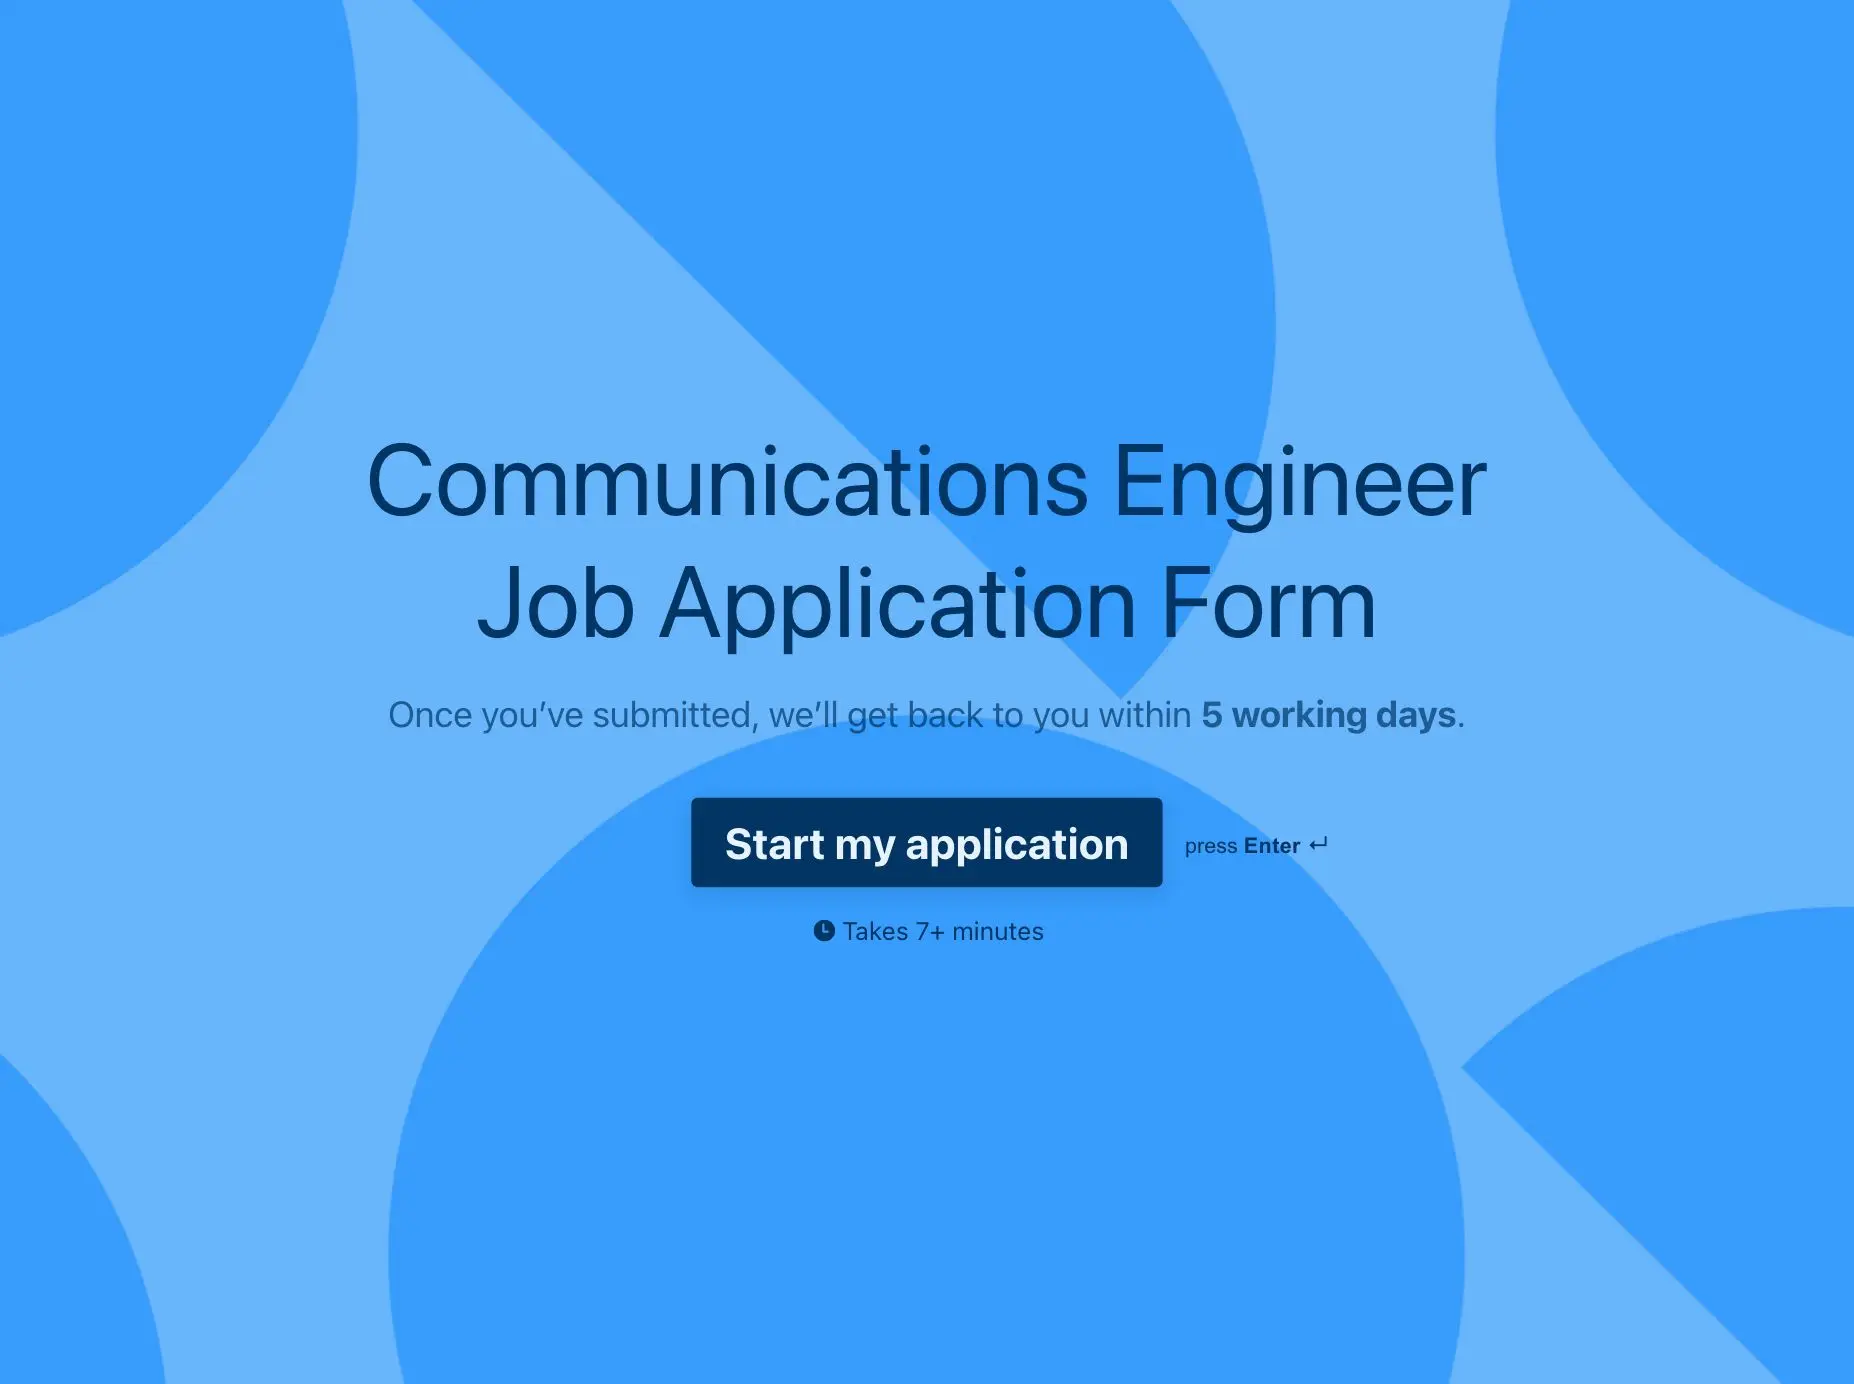 Communications Engineer Job Application Form Template Hero